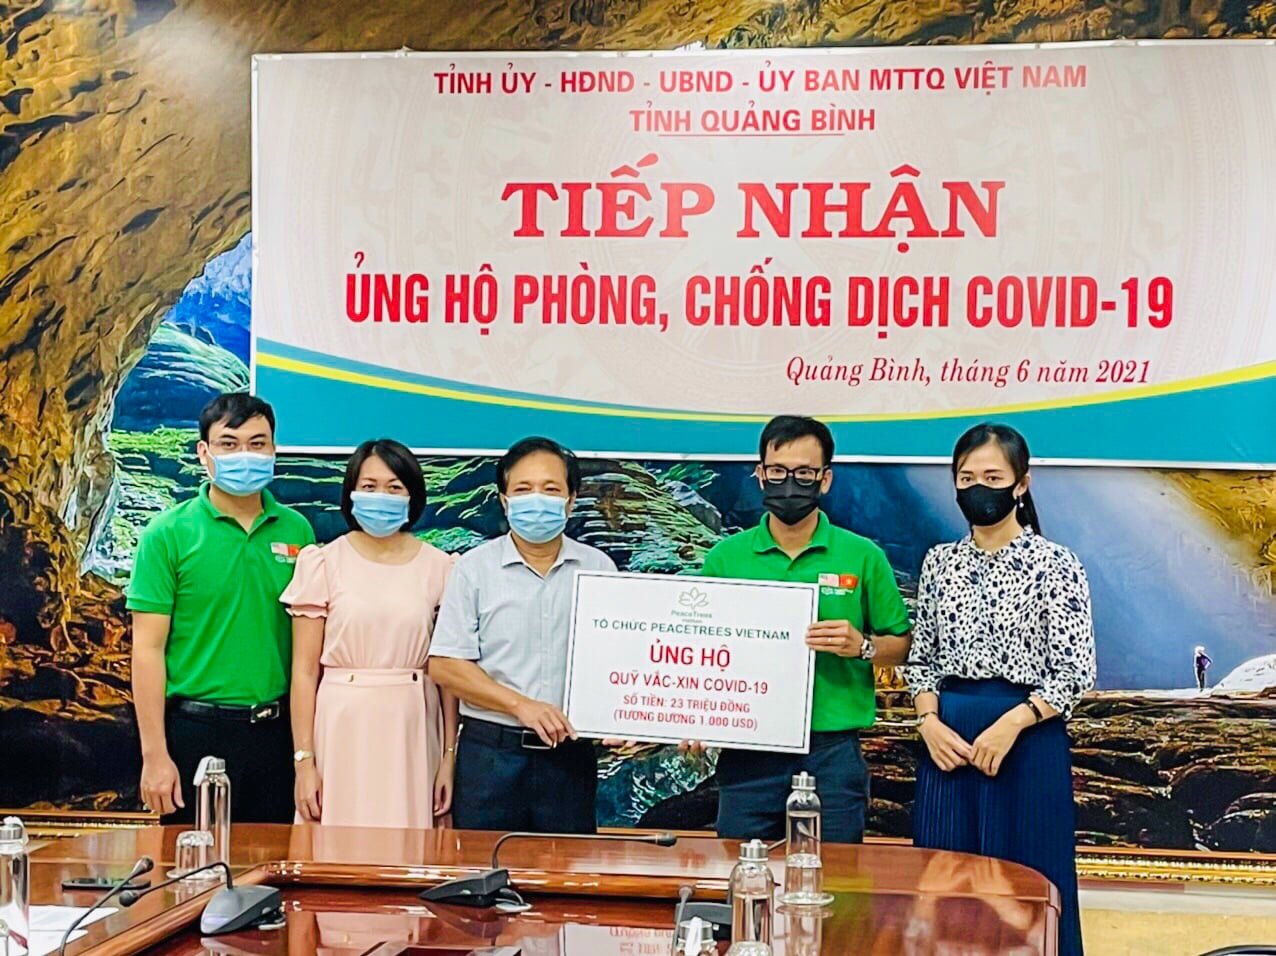 International friends join hands in Vietnam’s COVID-19 control effort